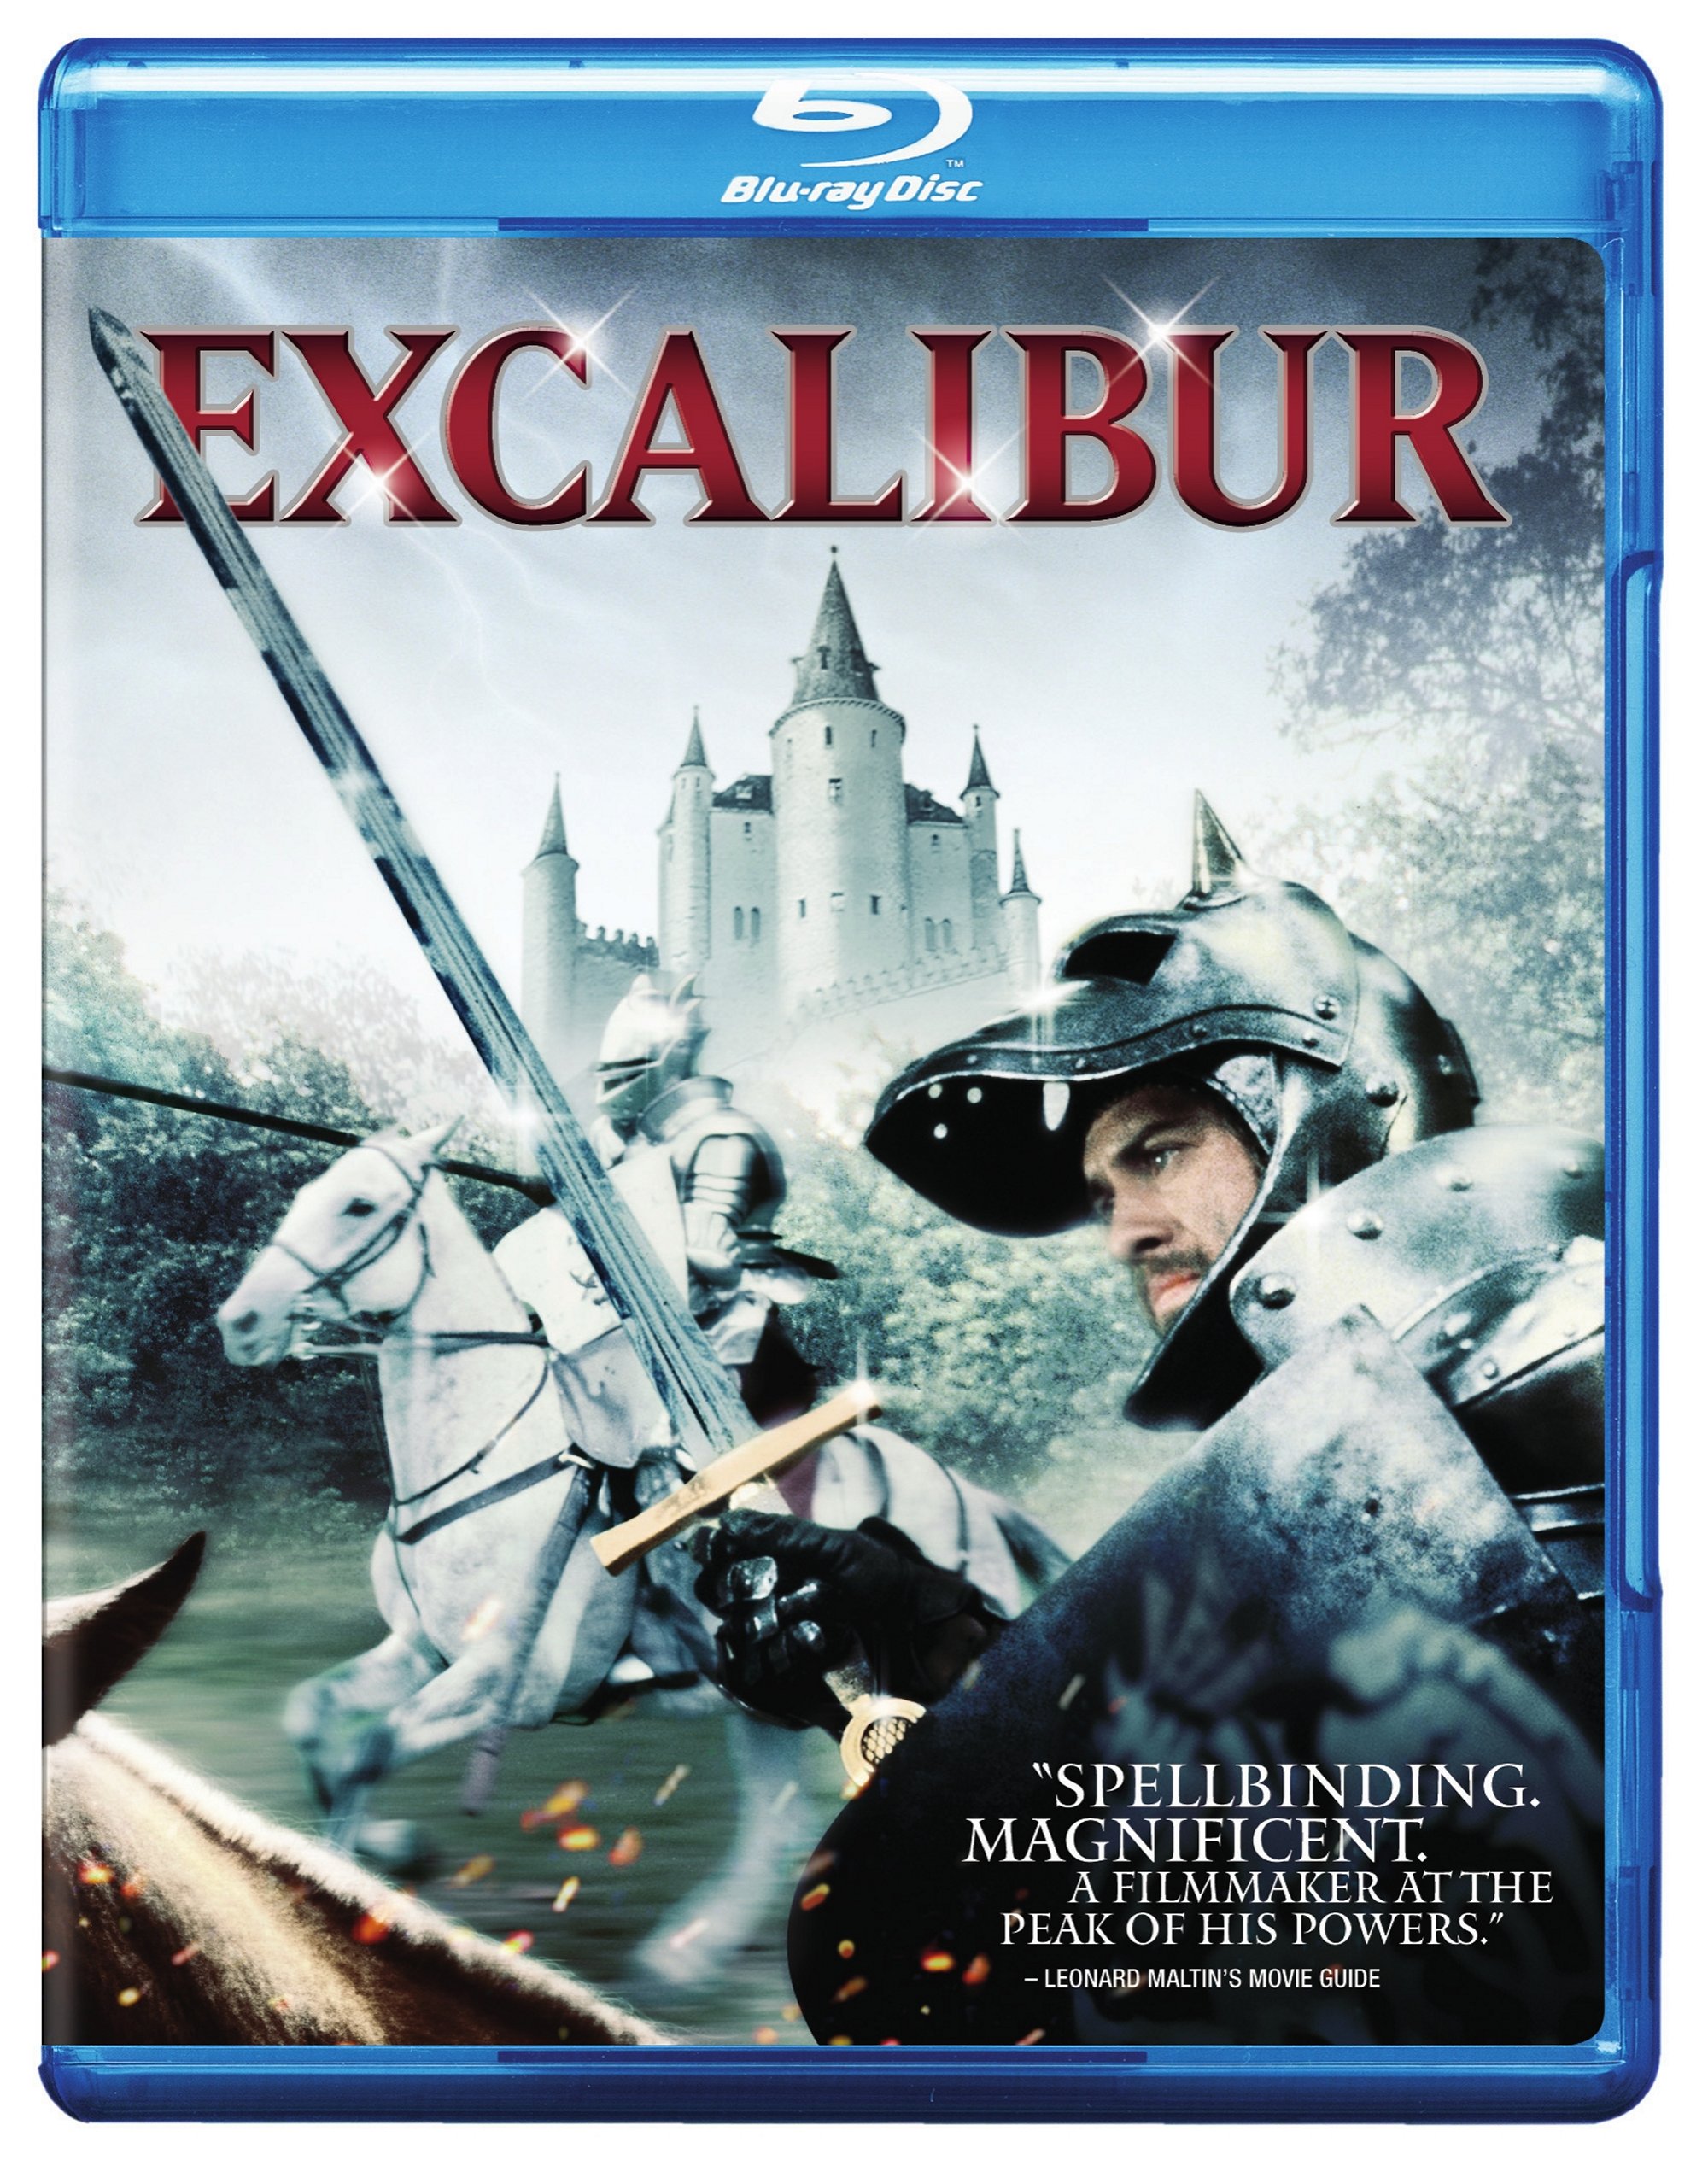 Excalibur - Blu-ray [ 1981 ]  - Action Movies On Blu-ray - Movies On GRUV